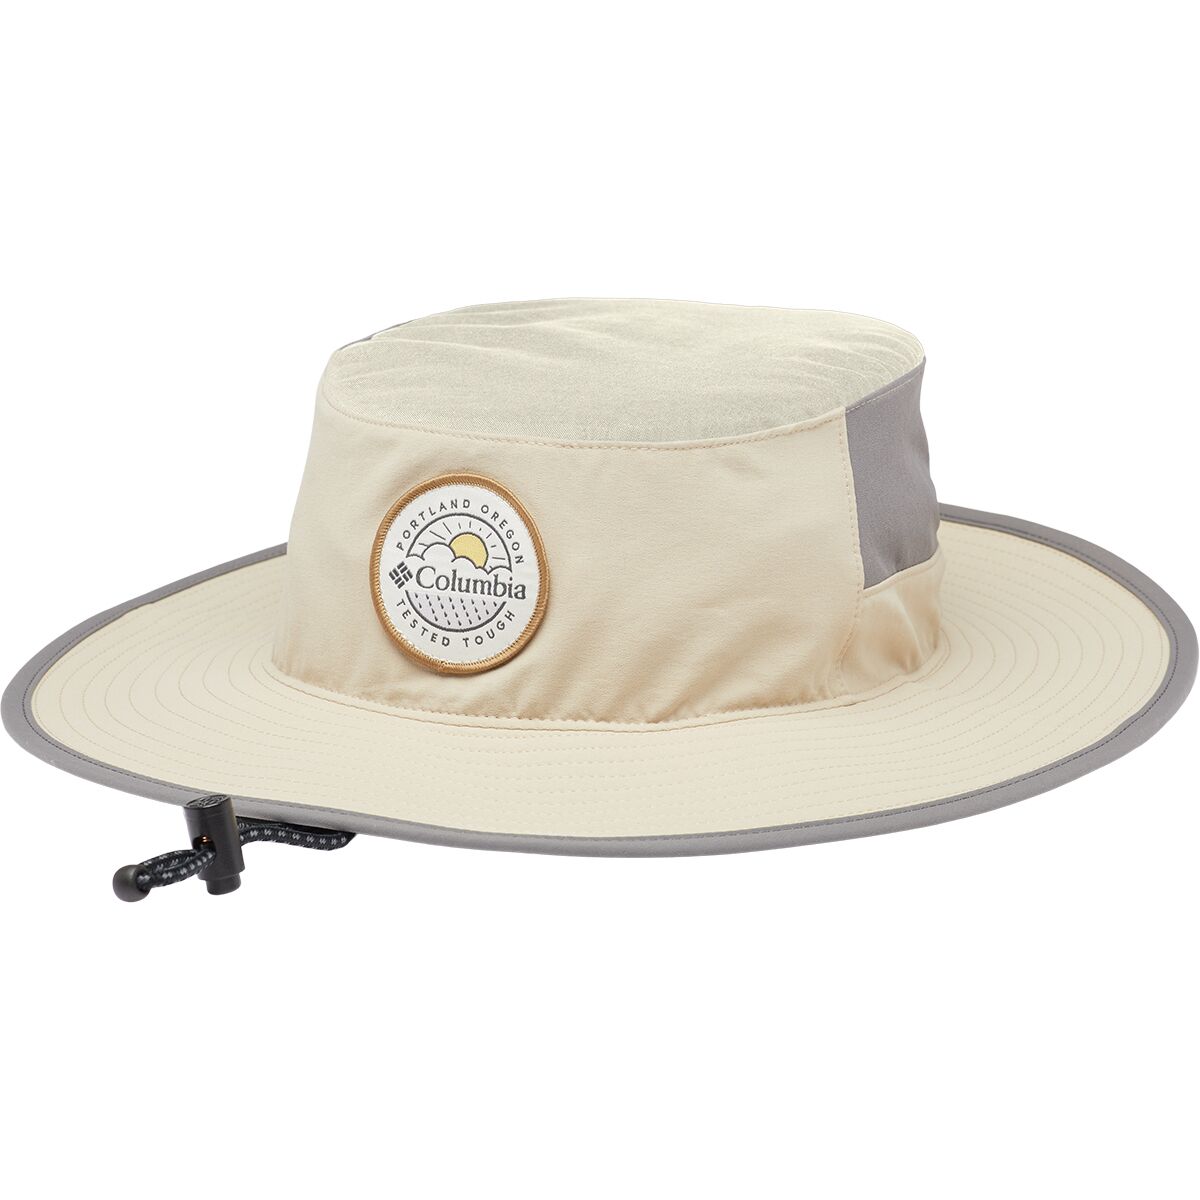 Columbia Broad Spectrum Booney Sun Hat - Accessories